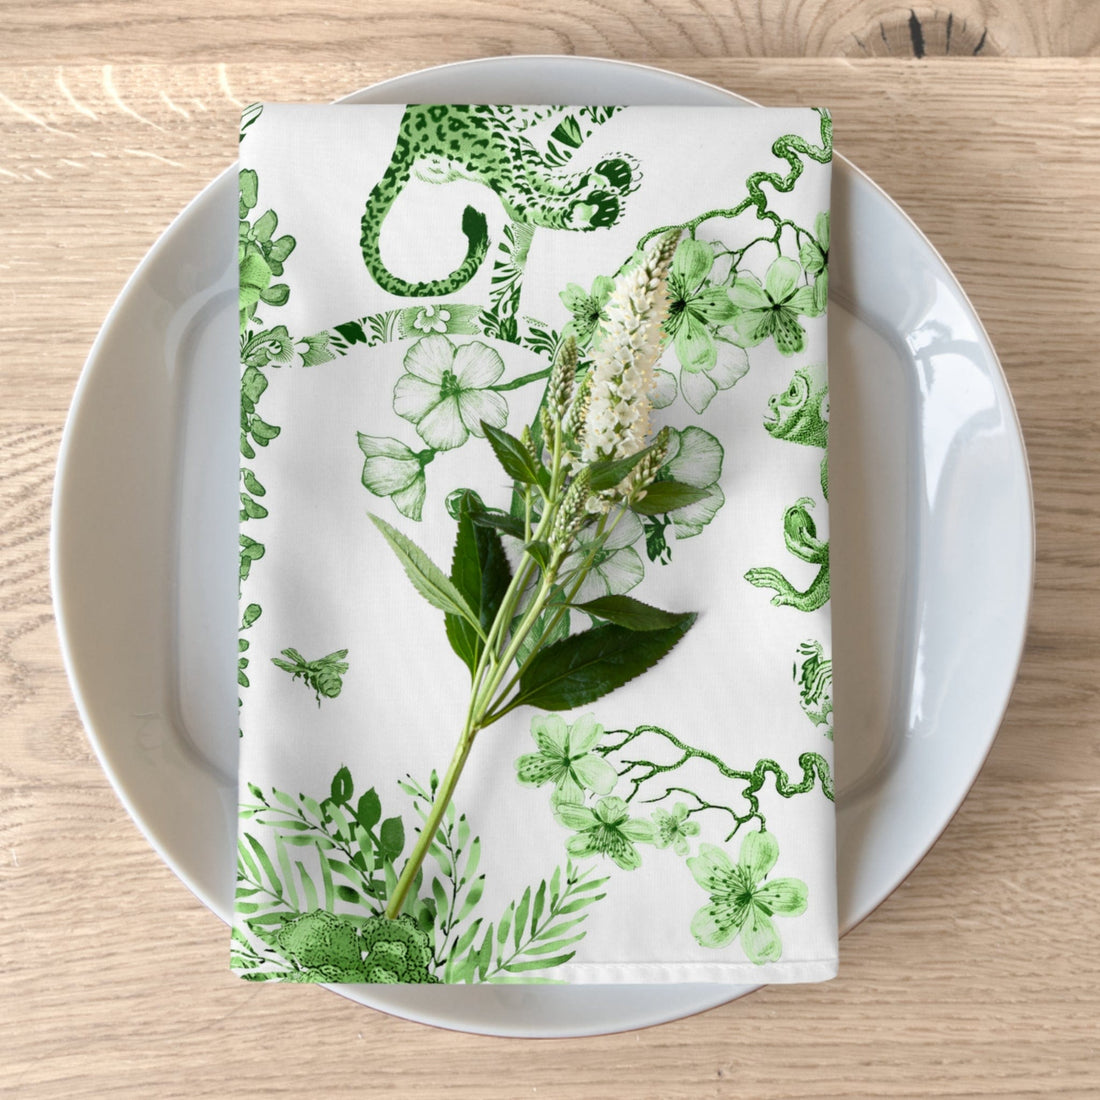 Kate McEnroe New York Set of 4 Floral Green and White Chinoiserie Cloth NapkinsNapkins27601241860098477342